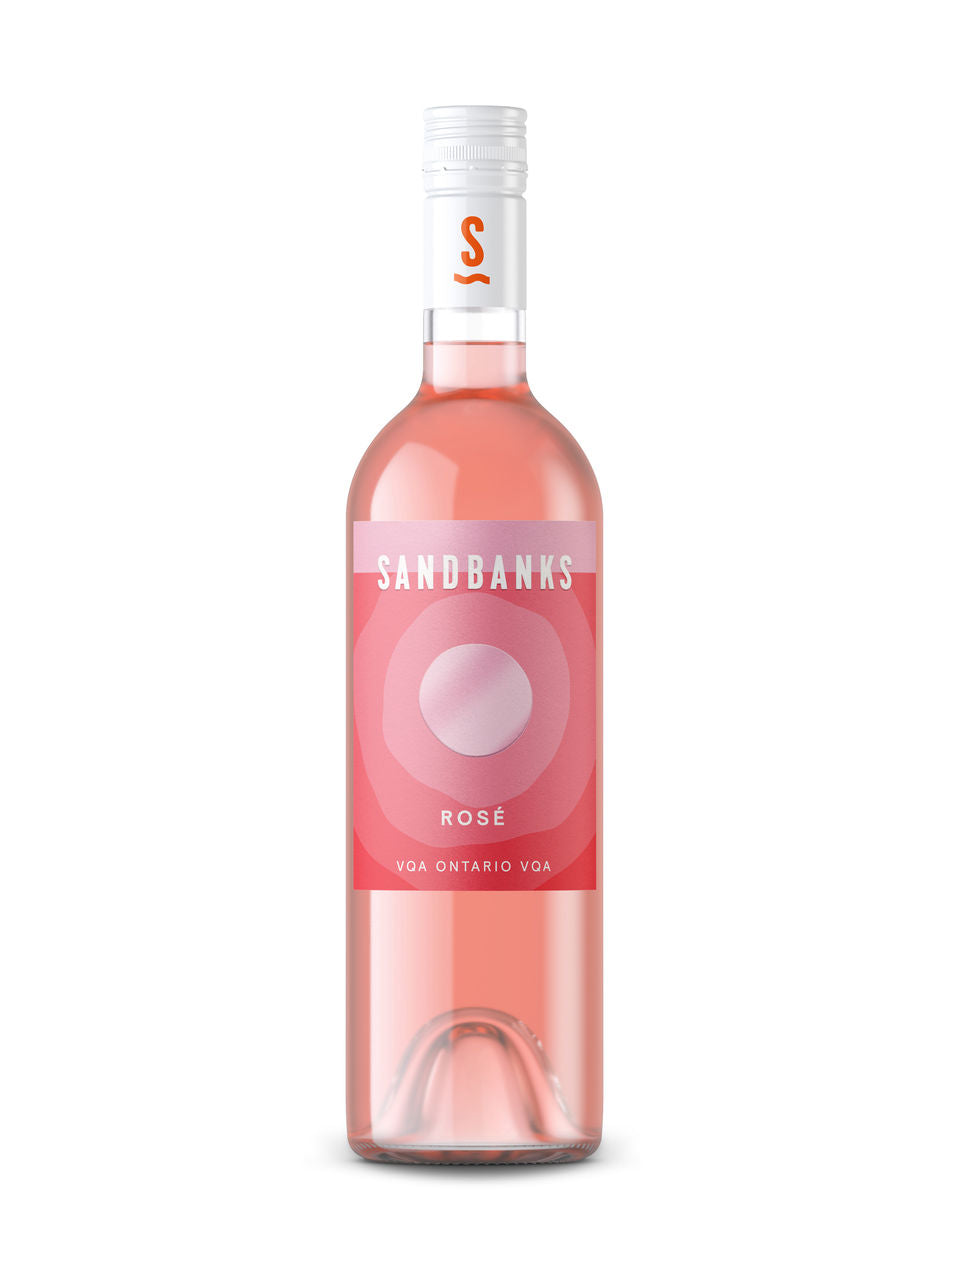 Sandbanks Rosé VQA 750 ml bottle